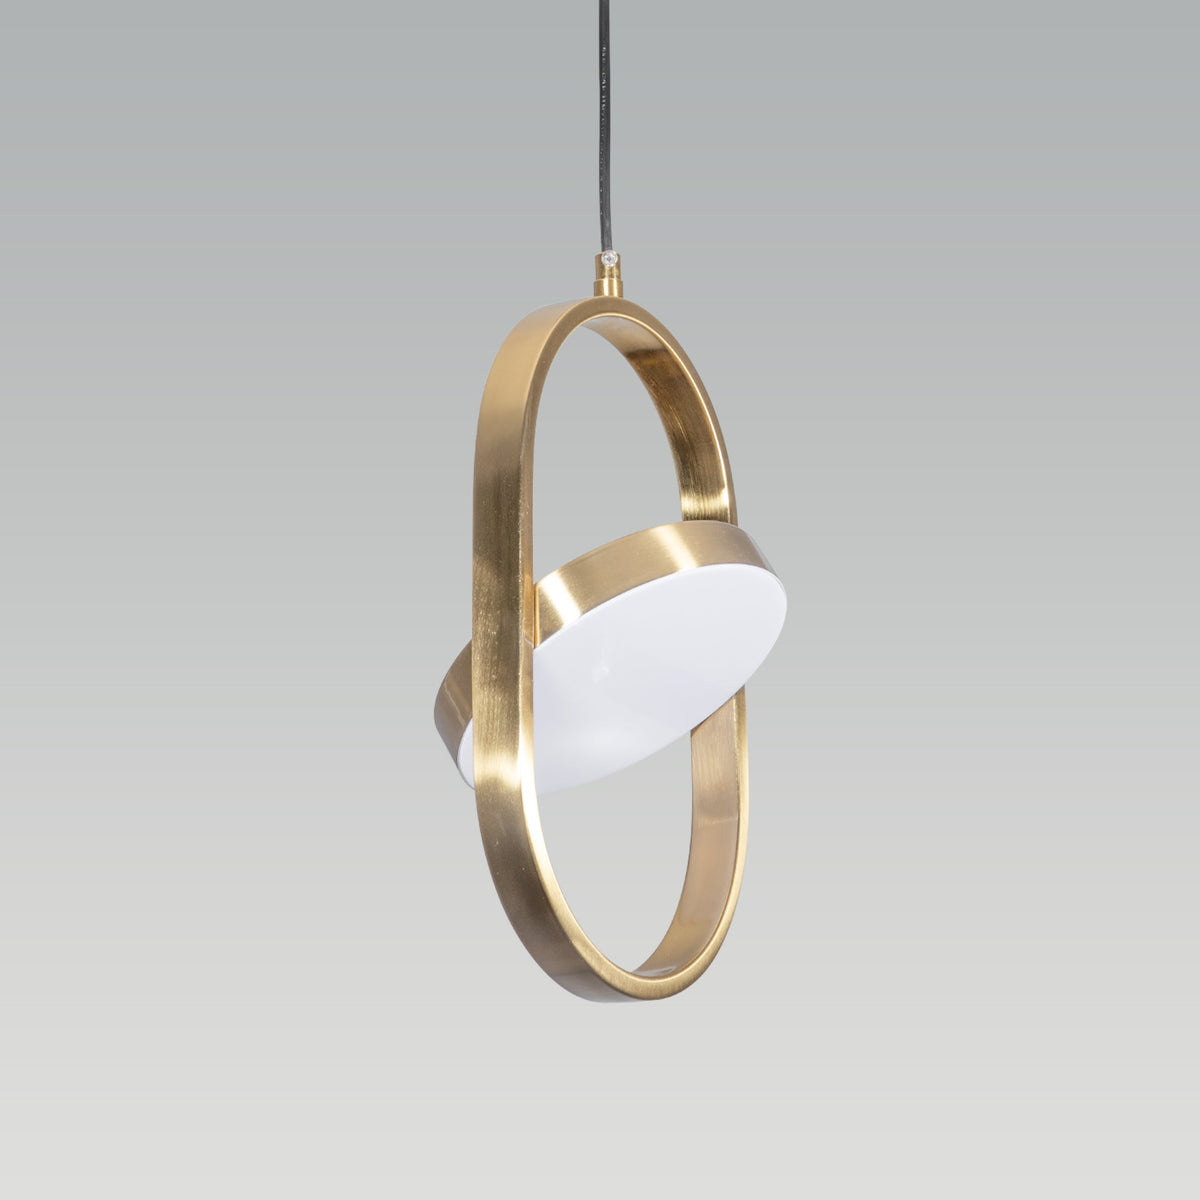 Shop Topline Brass LED Pendant Light online